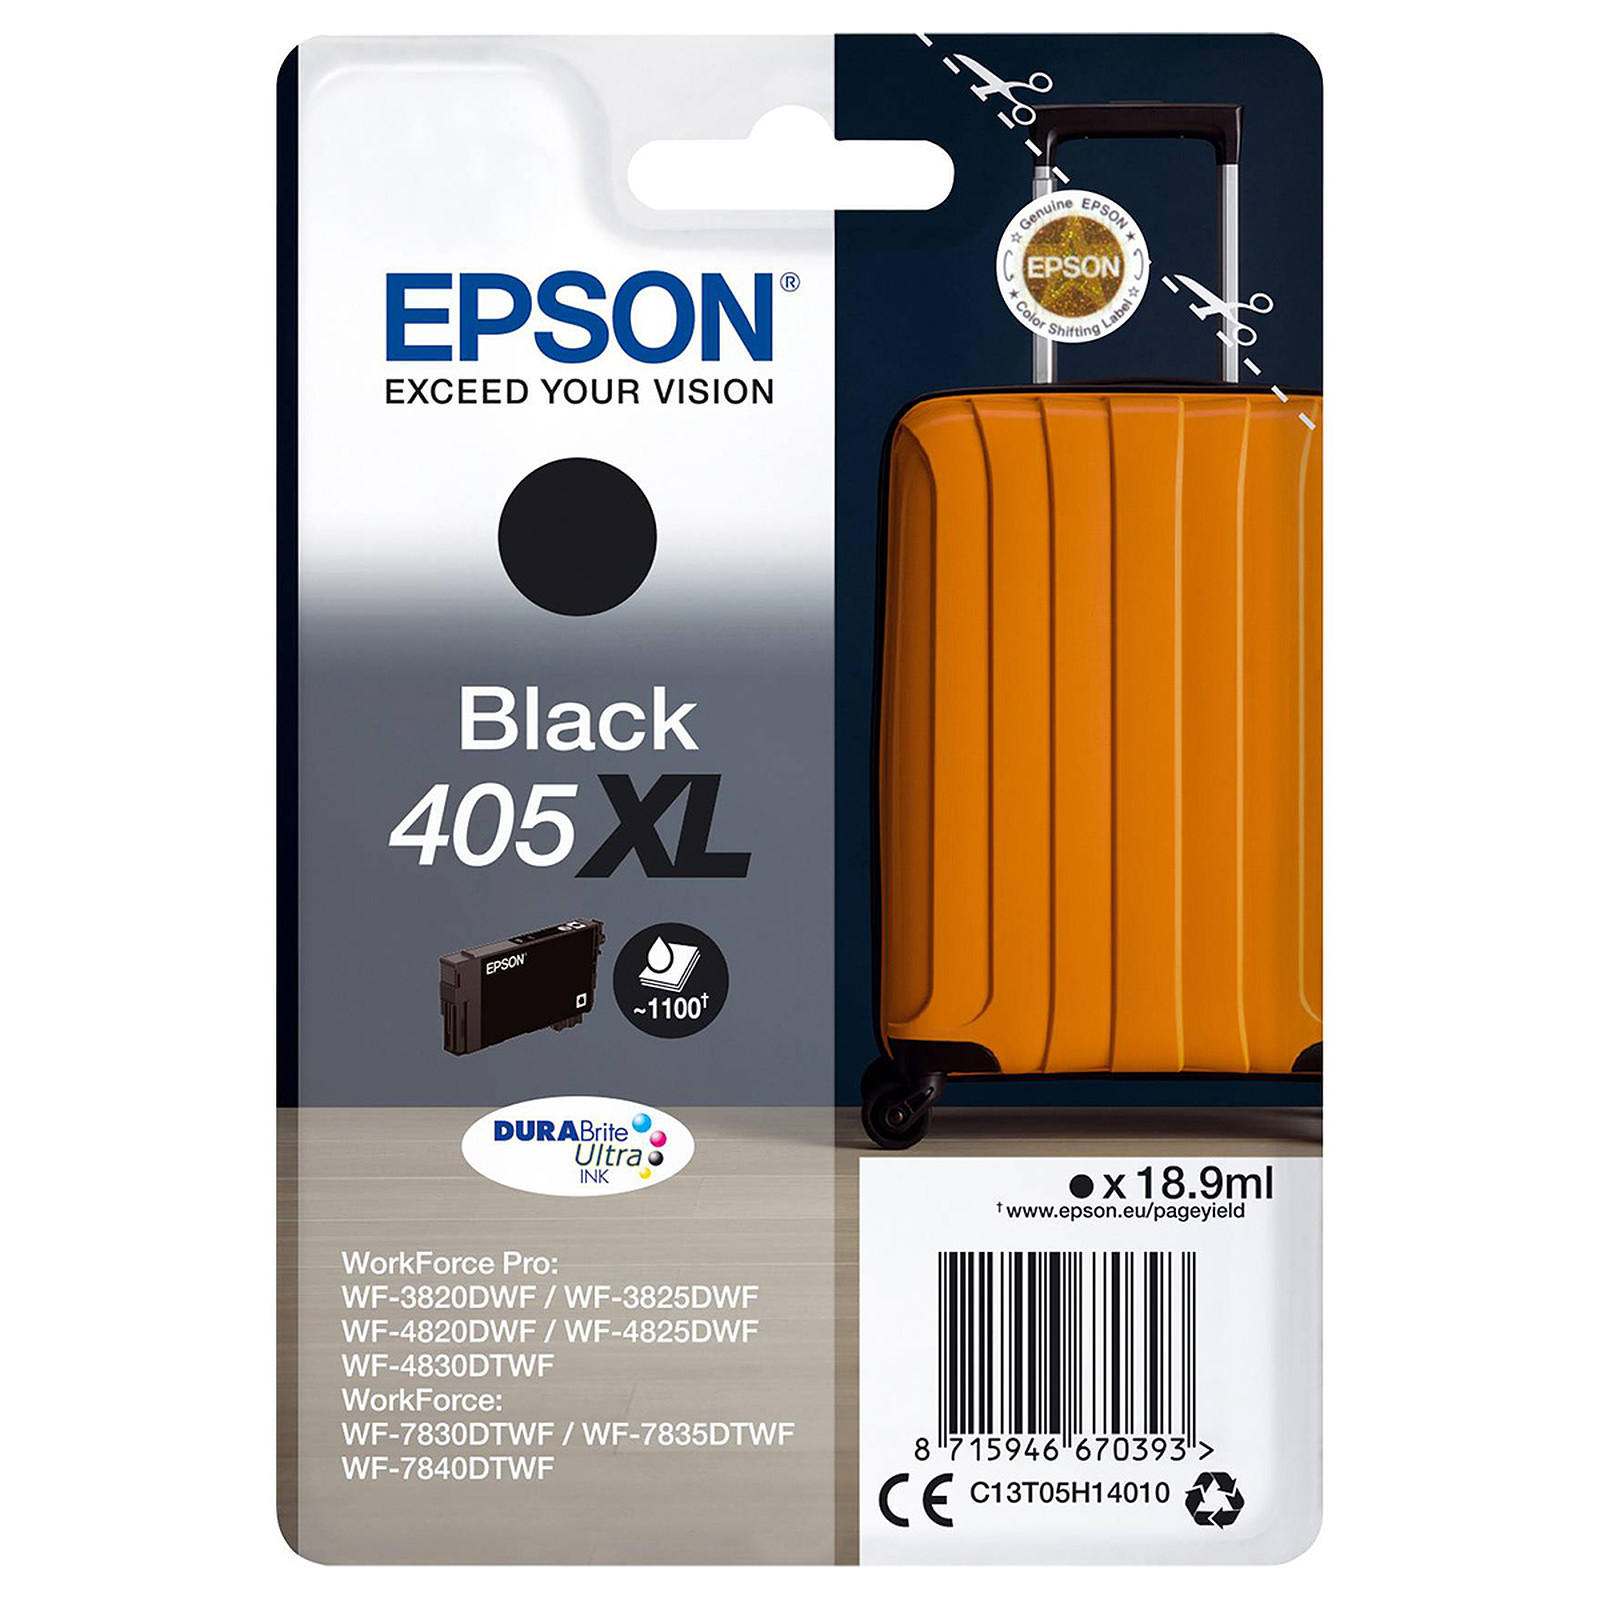 Epson Valise 405XL Noir - Cartouche imprimante Epson